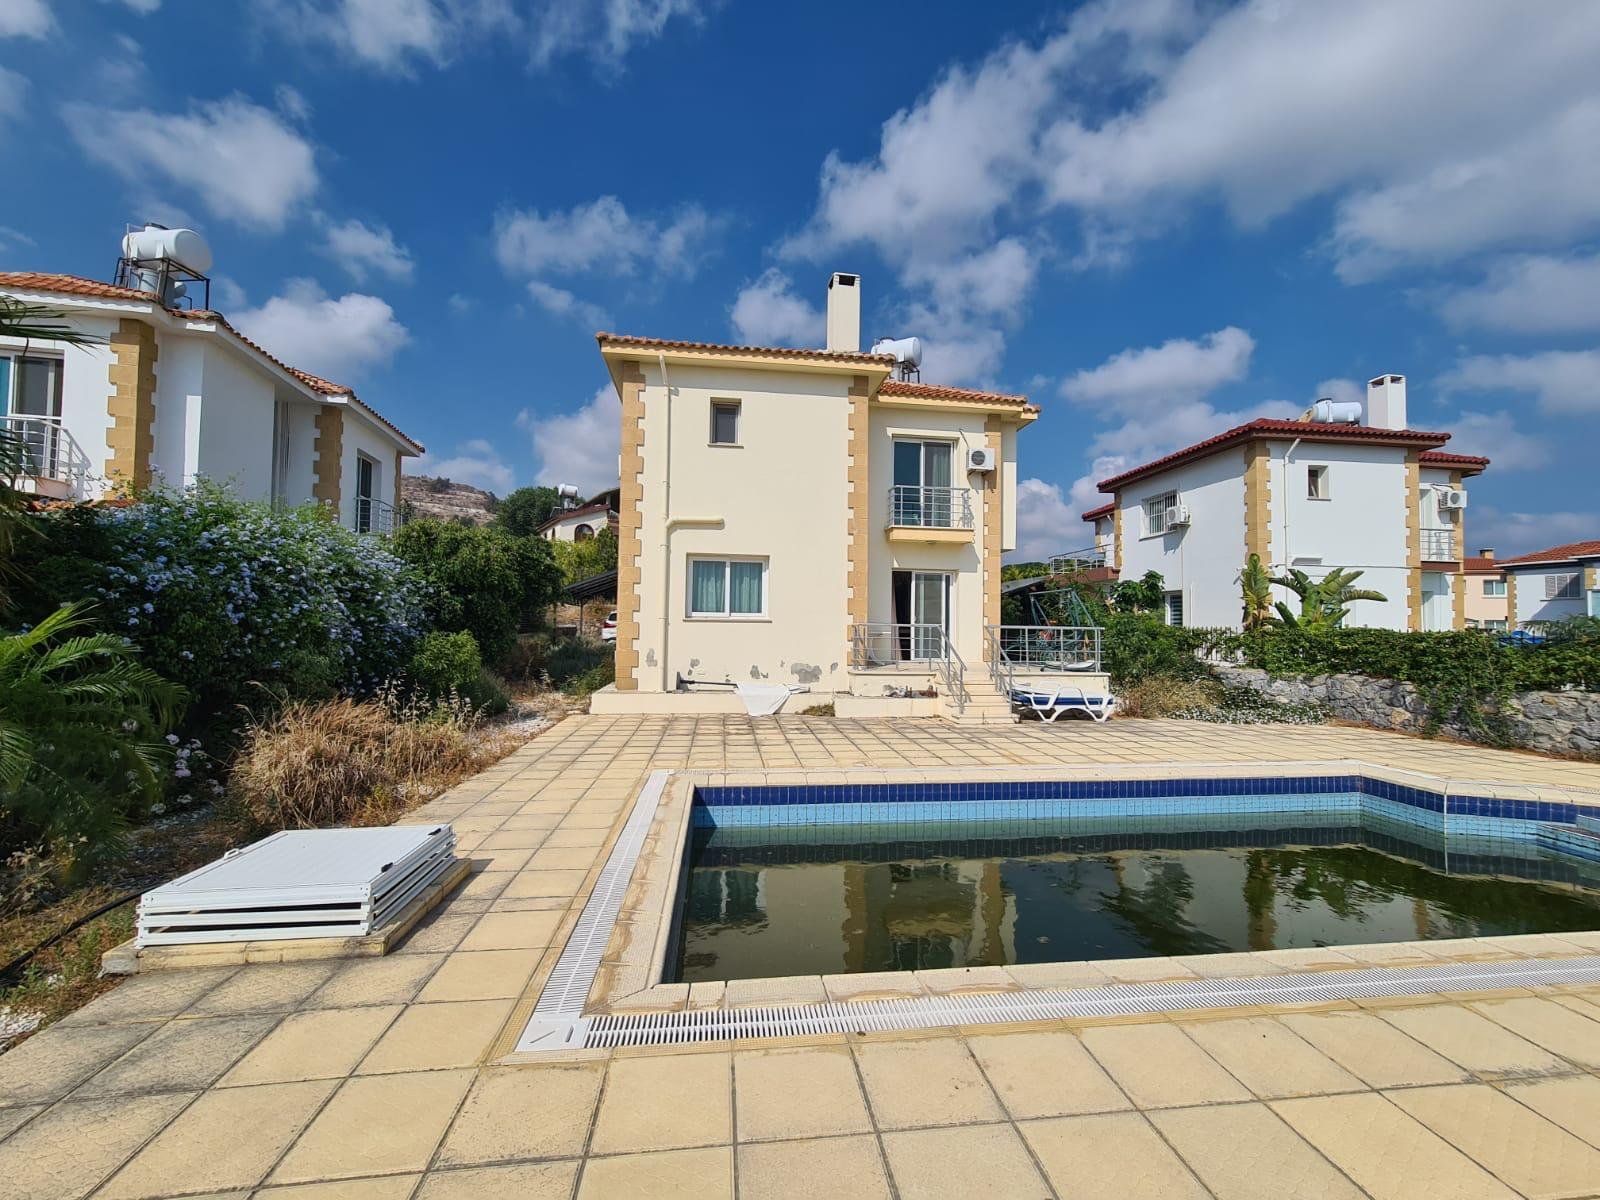 3 bedroom villa for sale in Kyrenia, Karshiyaka-bafd7173-3703-4c7a-869a-75ecd44a6358